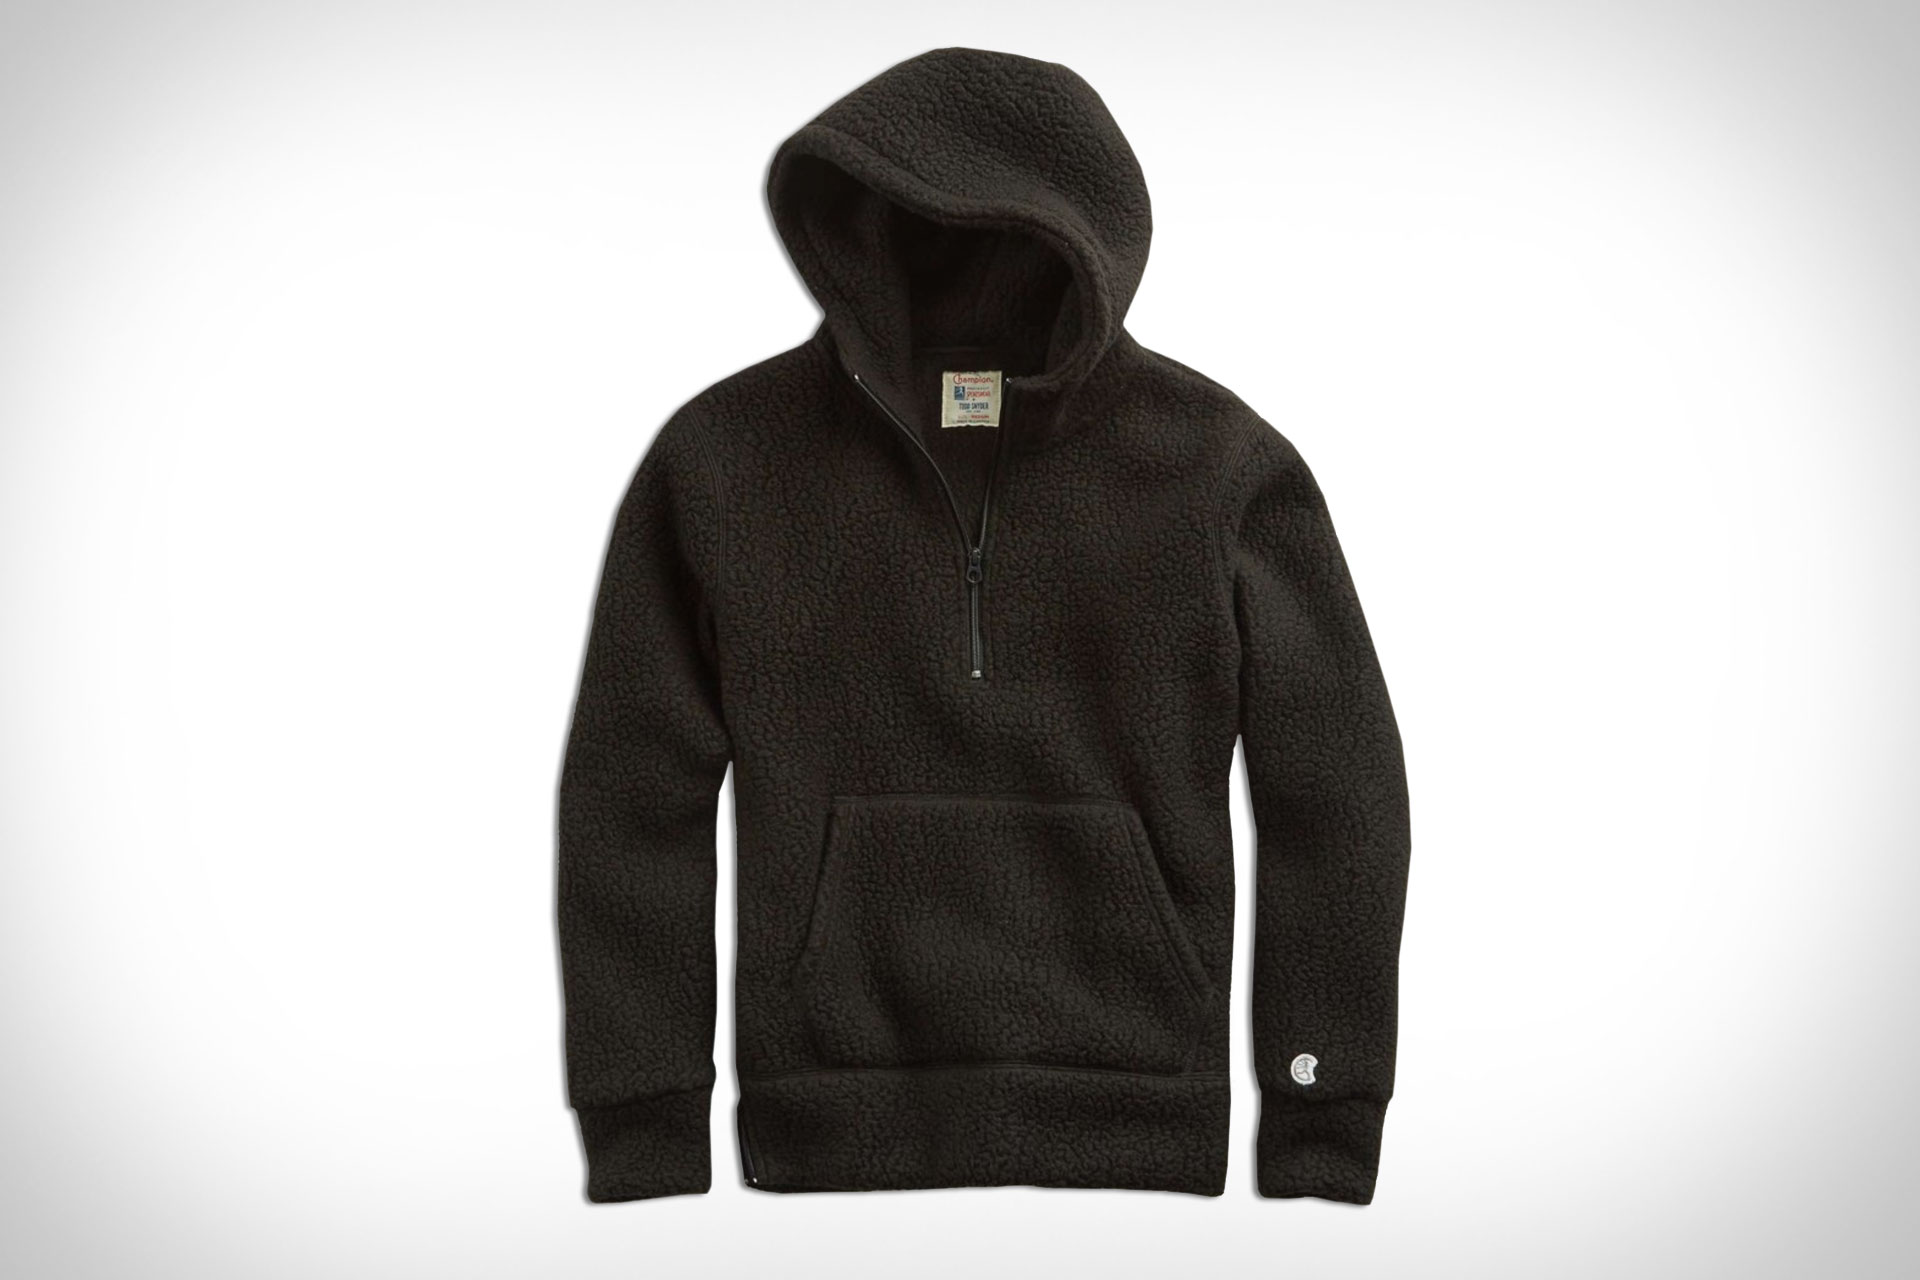 Buy > champion sherpa hoodie > in stock